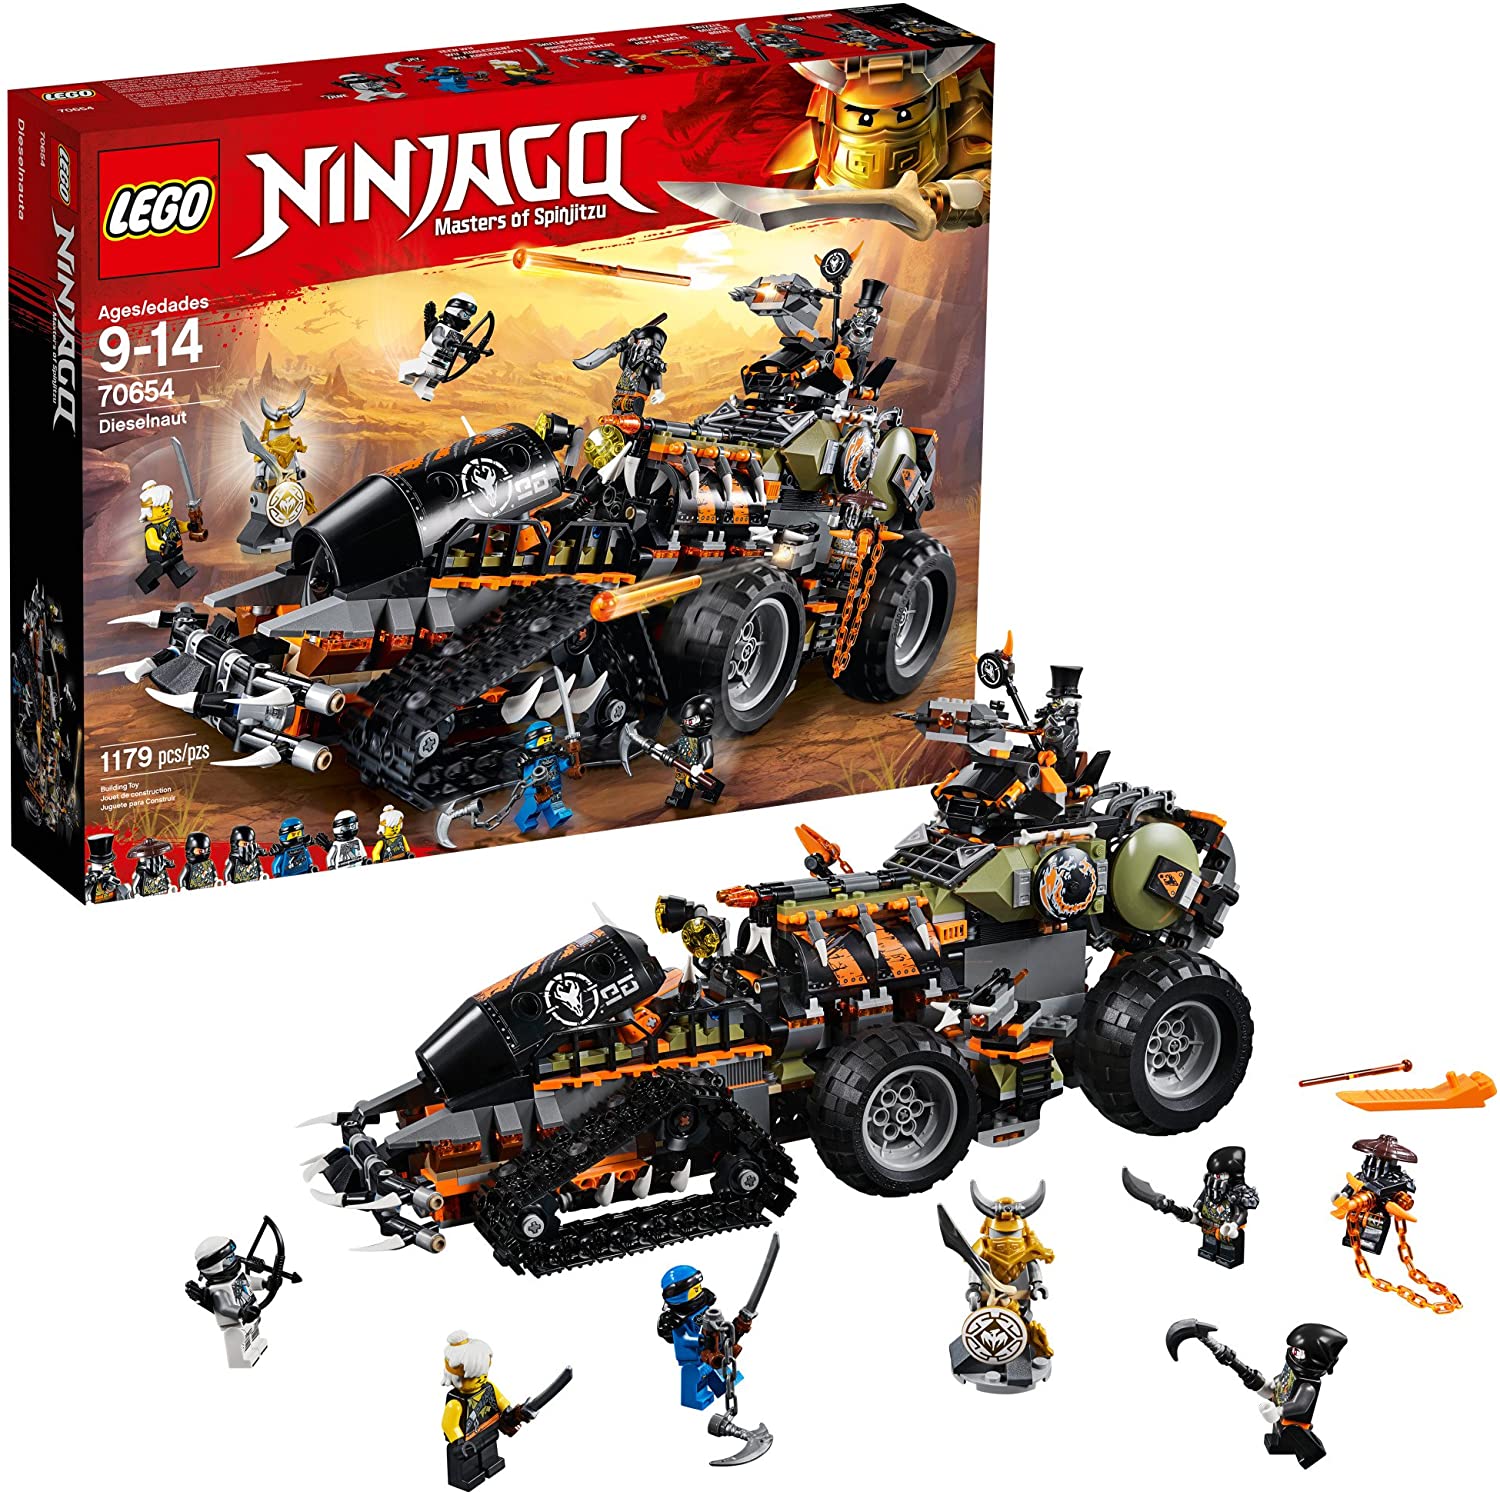 LEGO NINJAGO Masters of Spinjitzu: Dieselnaut 70654 Ninja Warrior Toy and Playset, Fun Building Kit with Brick Battle Tank Vehicle (1179 Pieces)